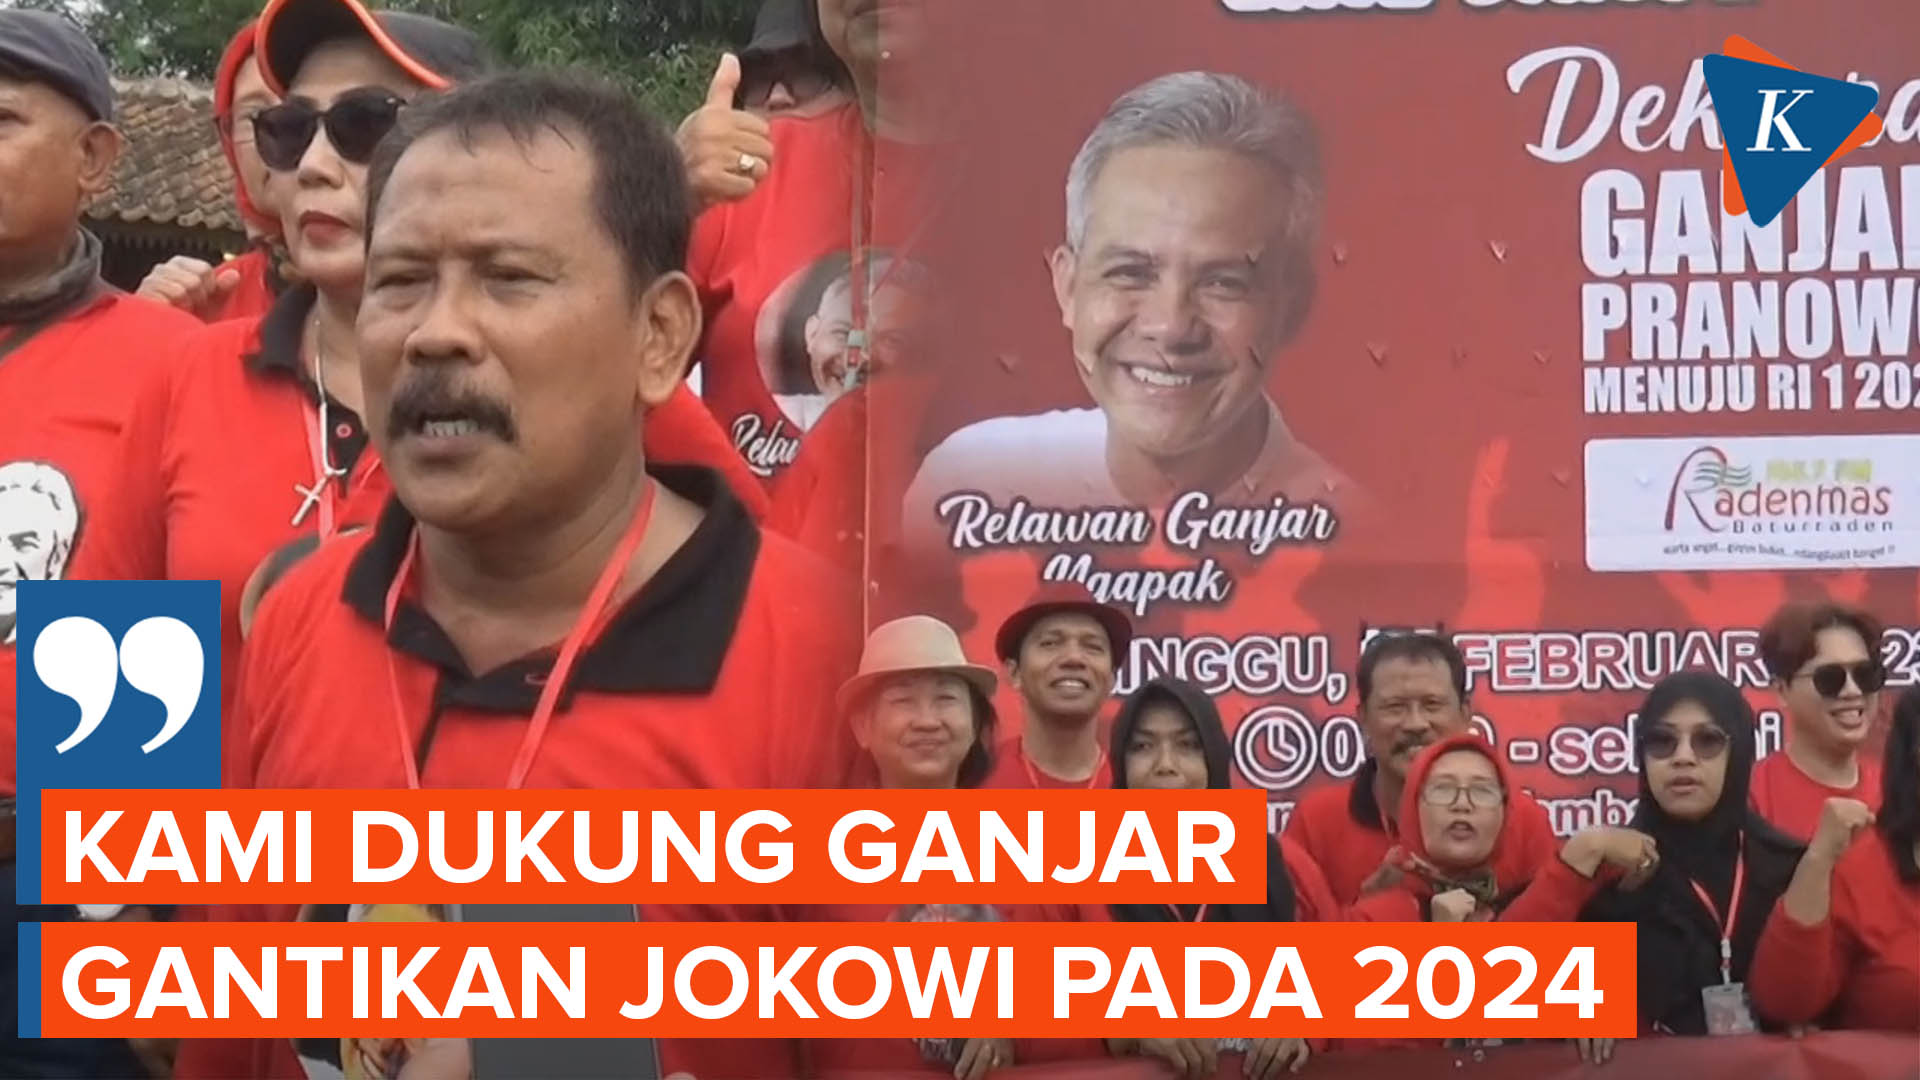 Relawan Ganjar Ngapak Deklarasi Ganjar Pranowo Jadi Calon Presiden 2024